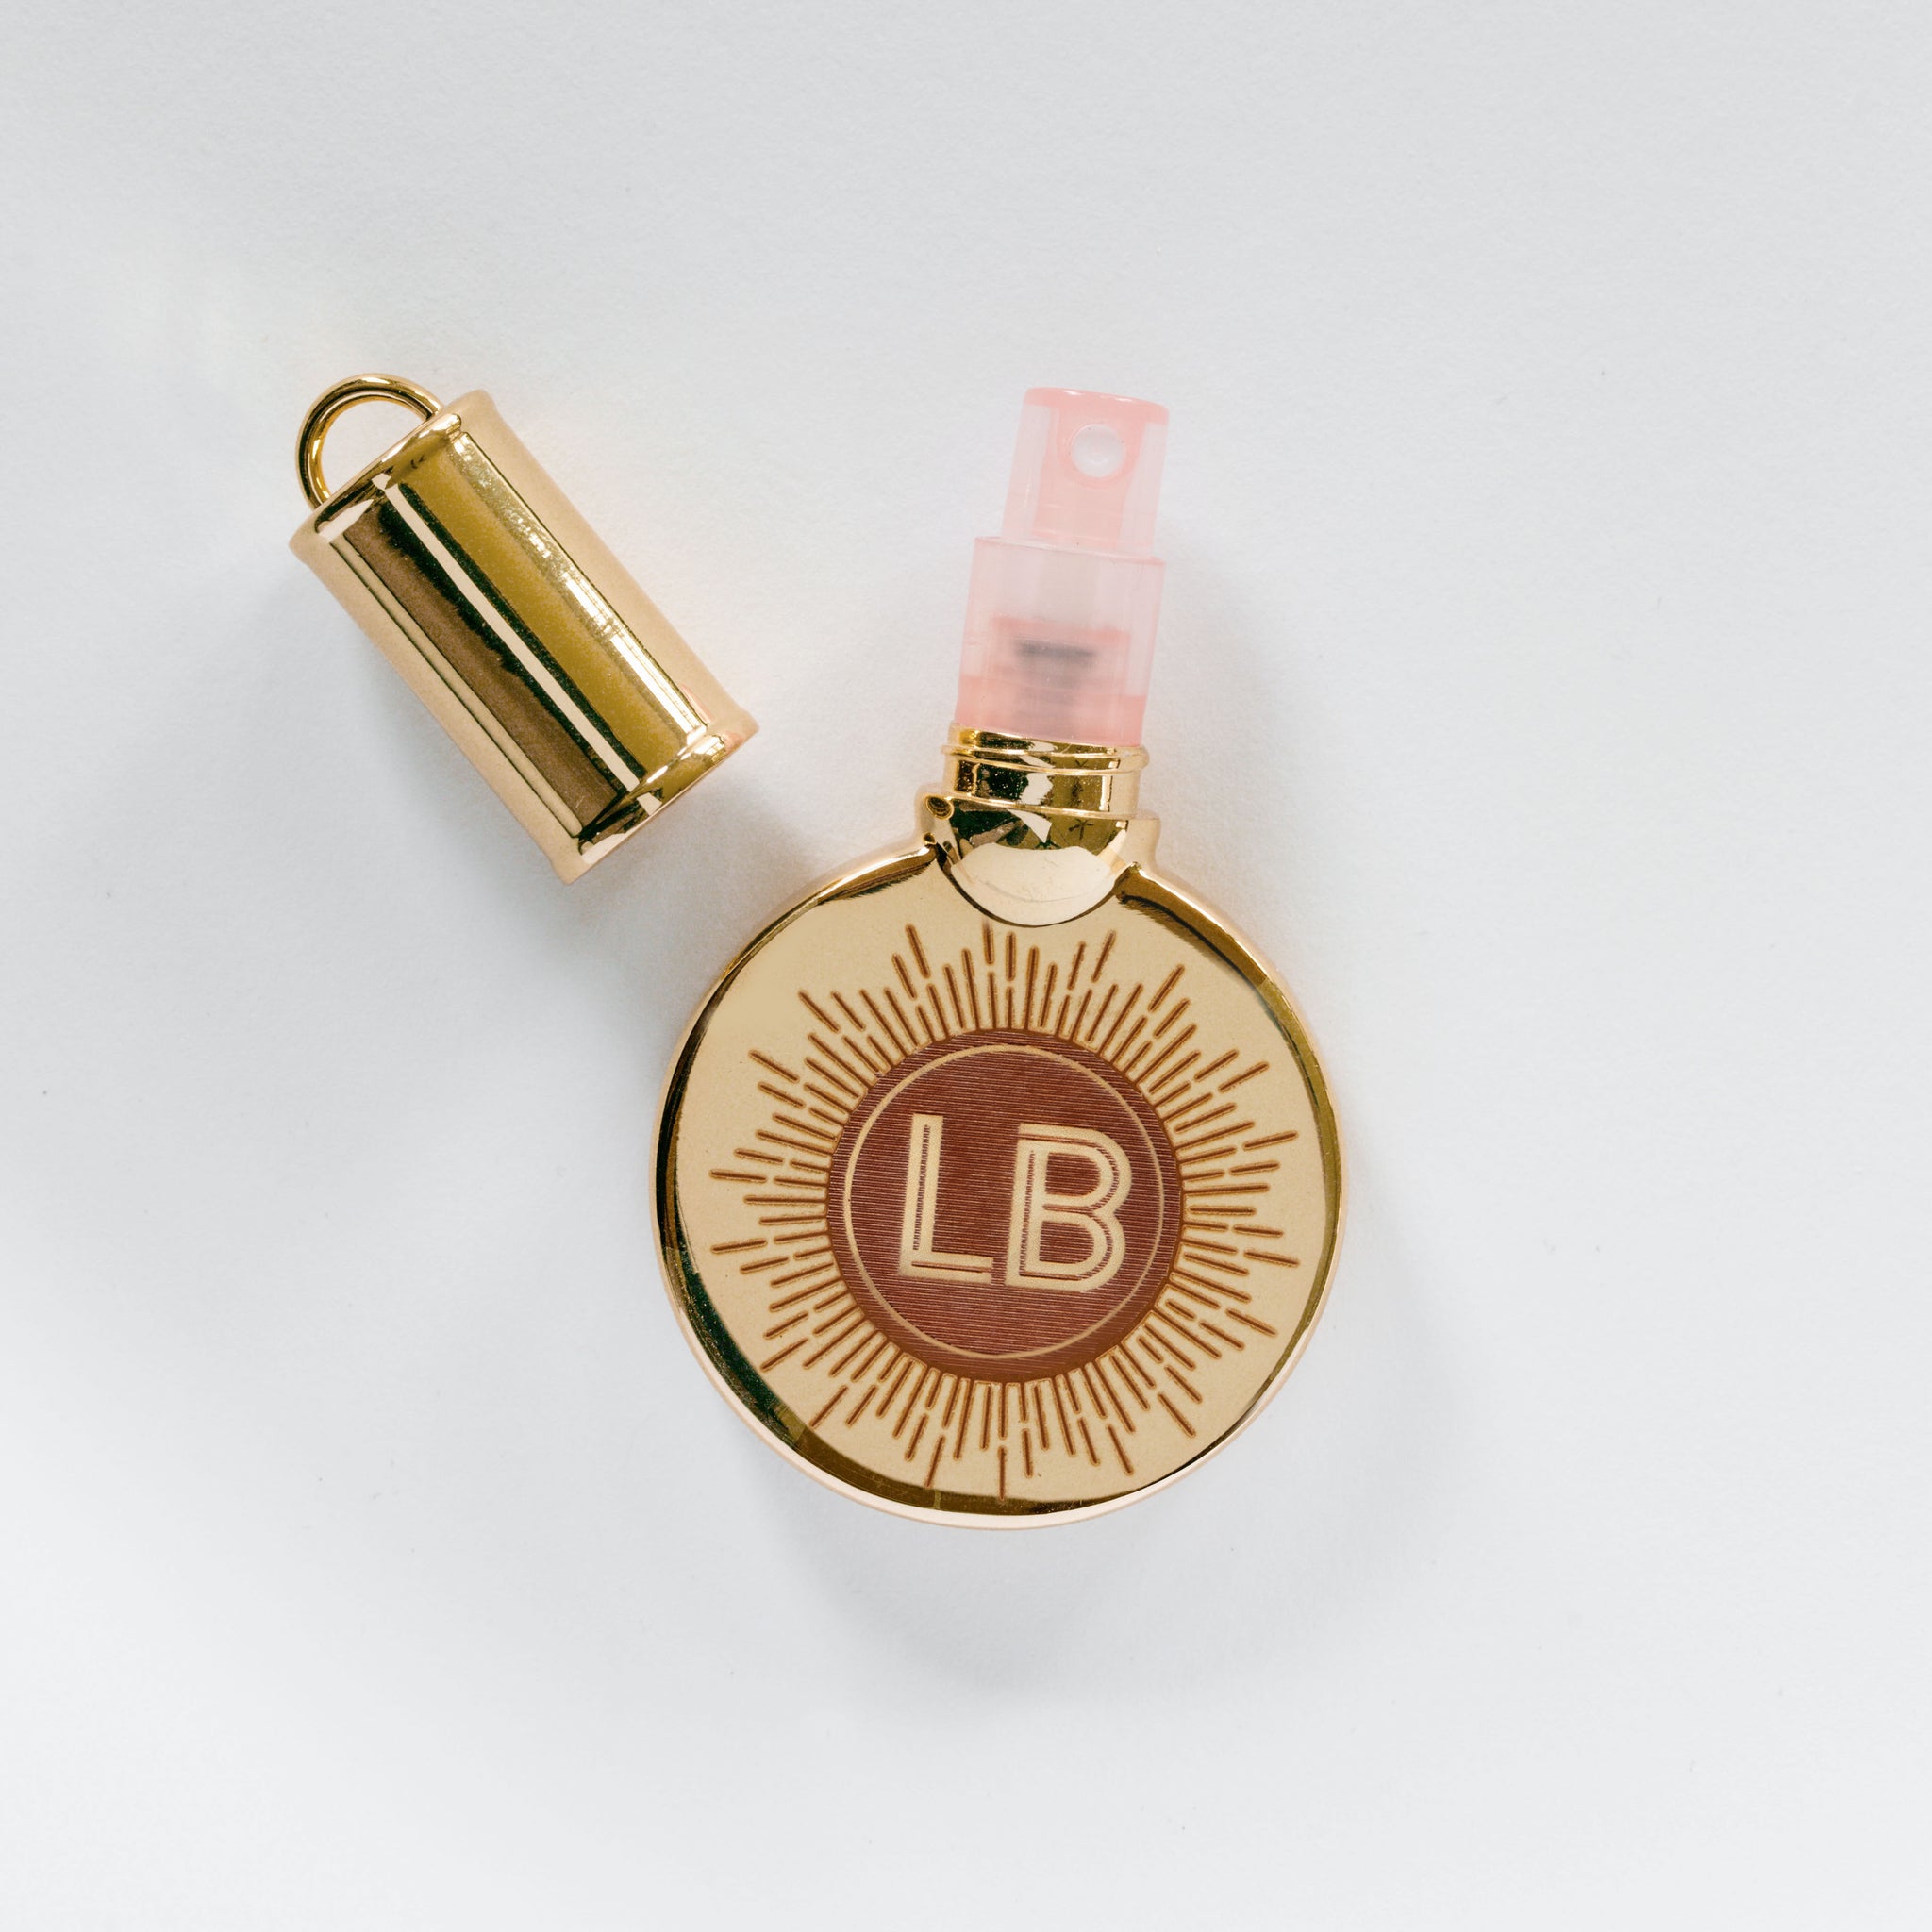 Perfume Dispensing Keychain - Sunburst Design